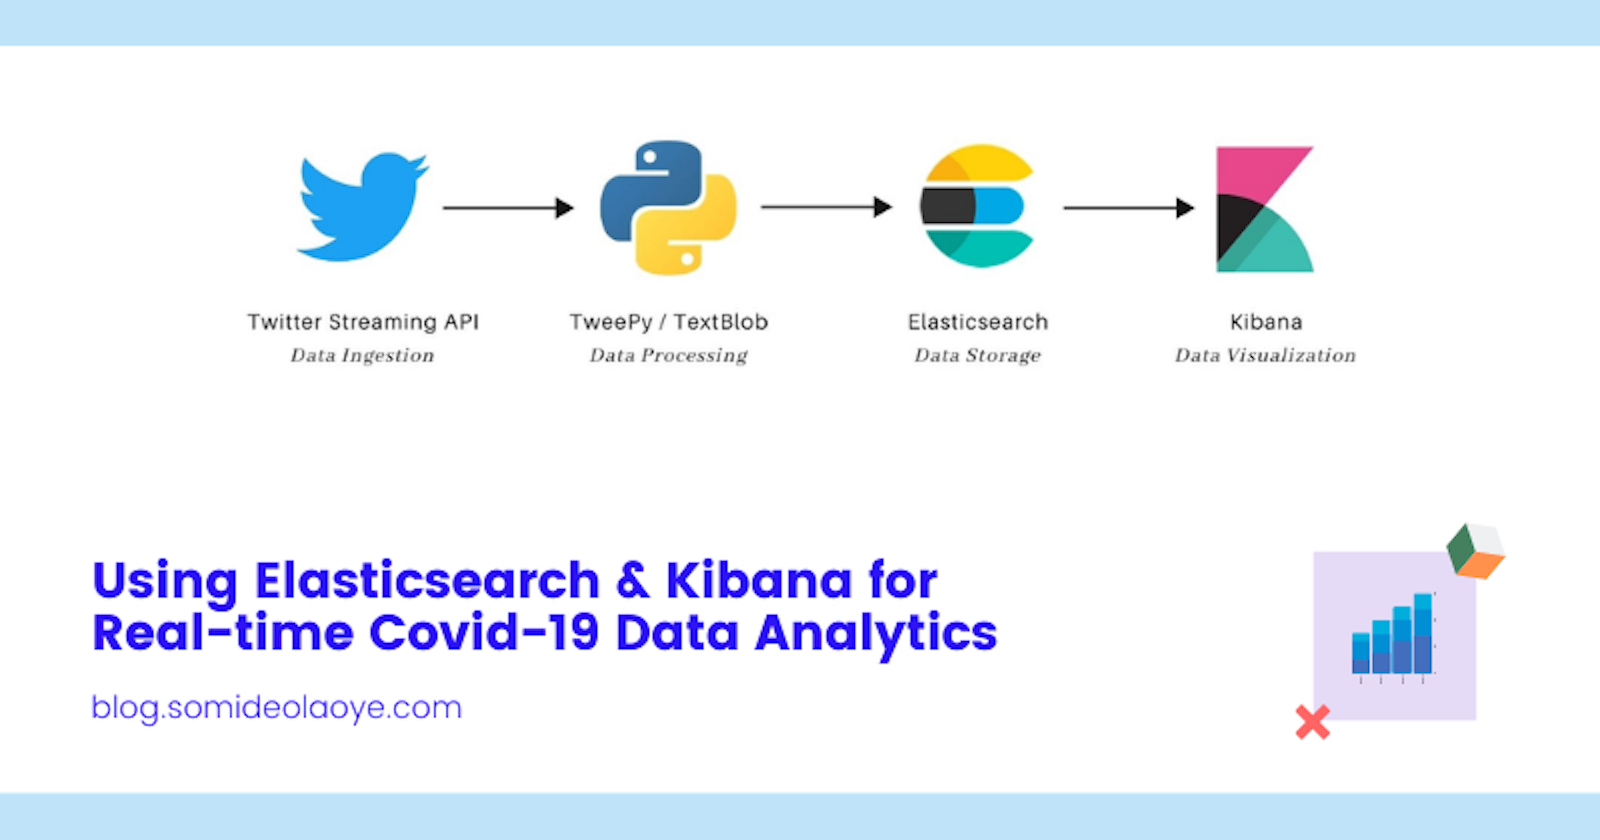 Using Elasticsearch & Kibana for Real-time Covid-19 Data Analytics.